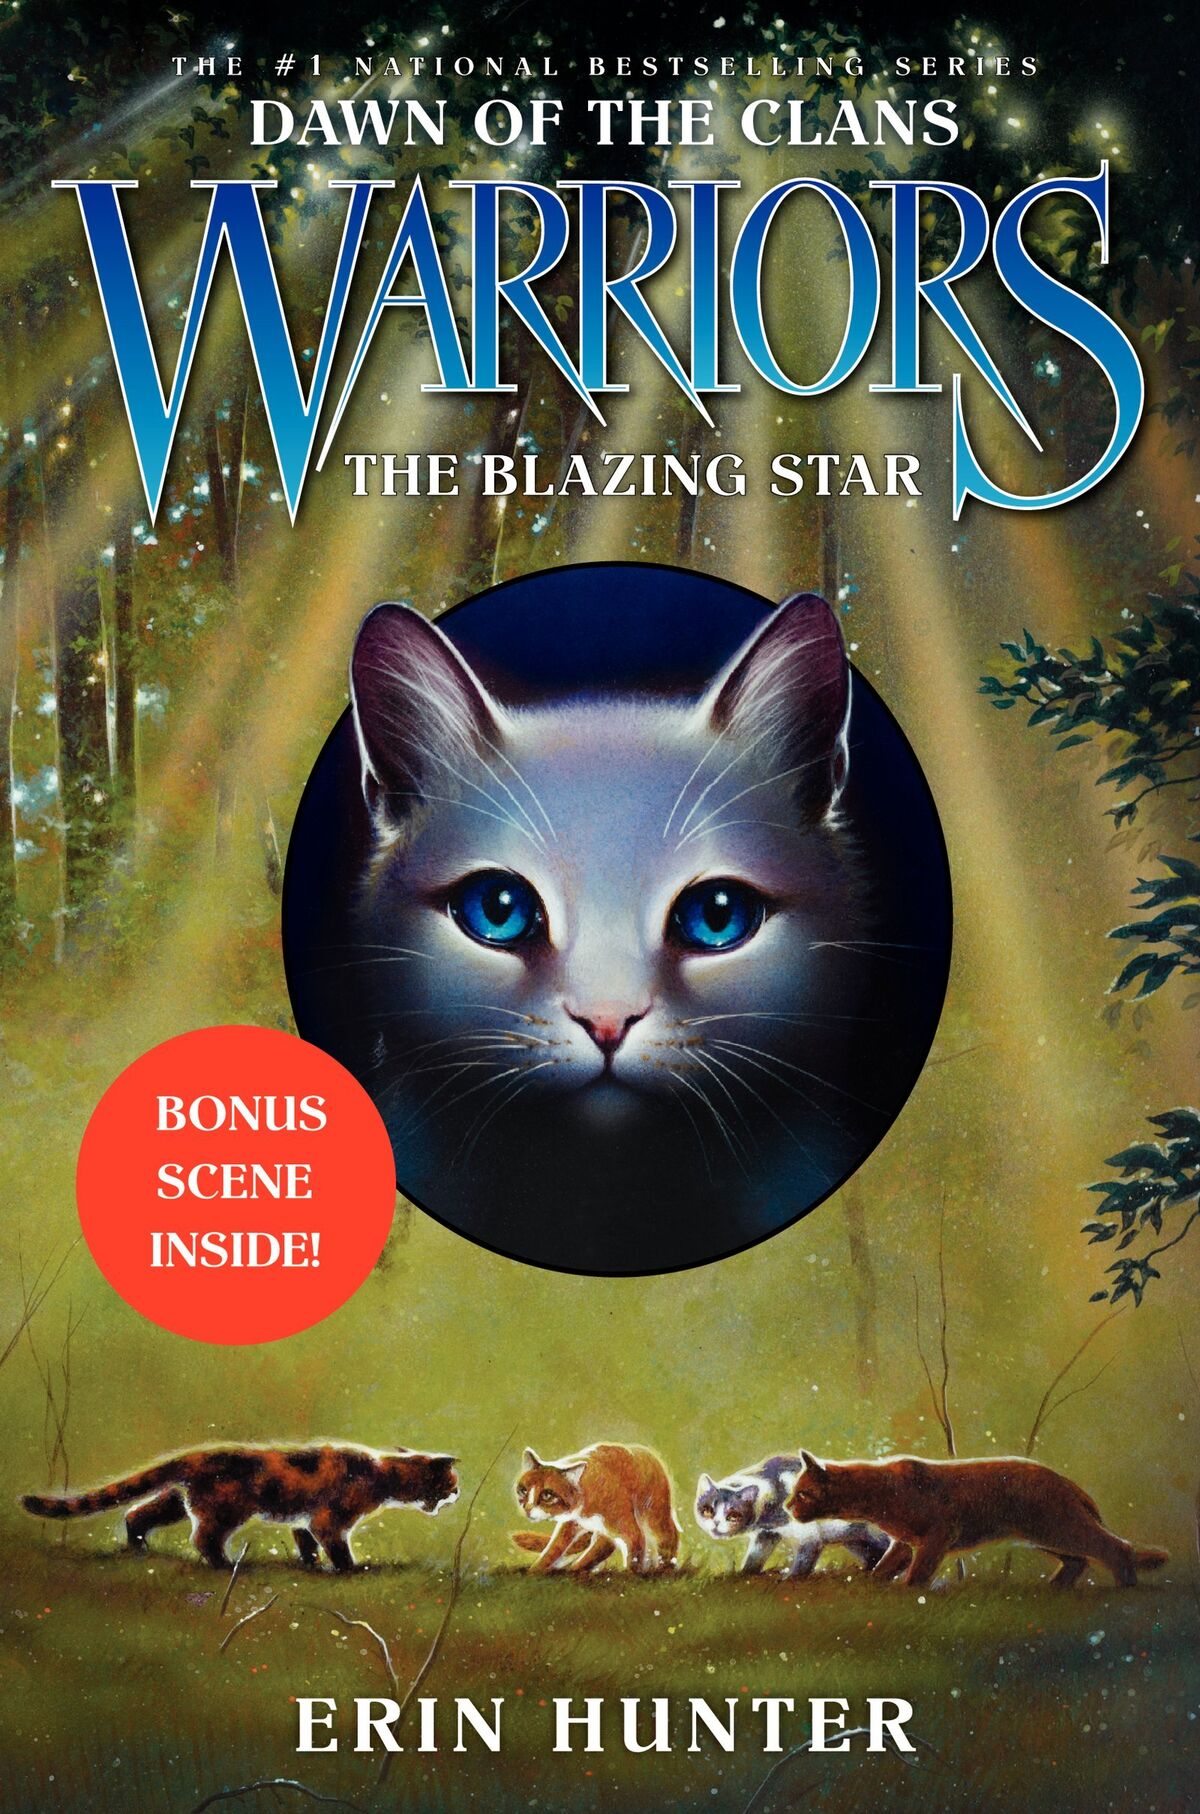 Warriors The Broken Code Lost Stars Book l Official Warrior Cats Store